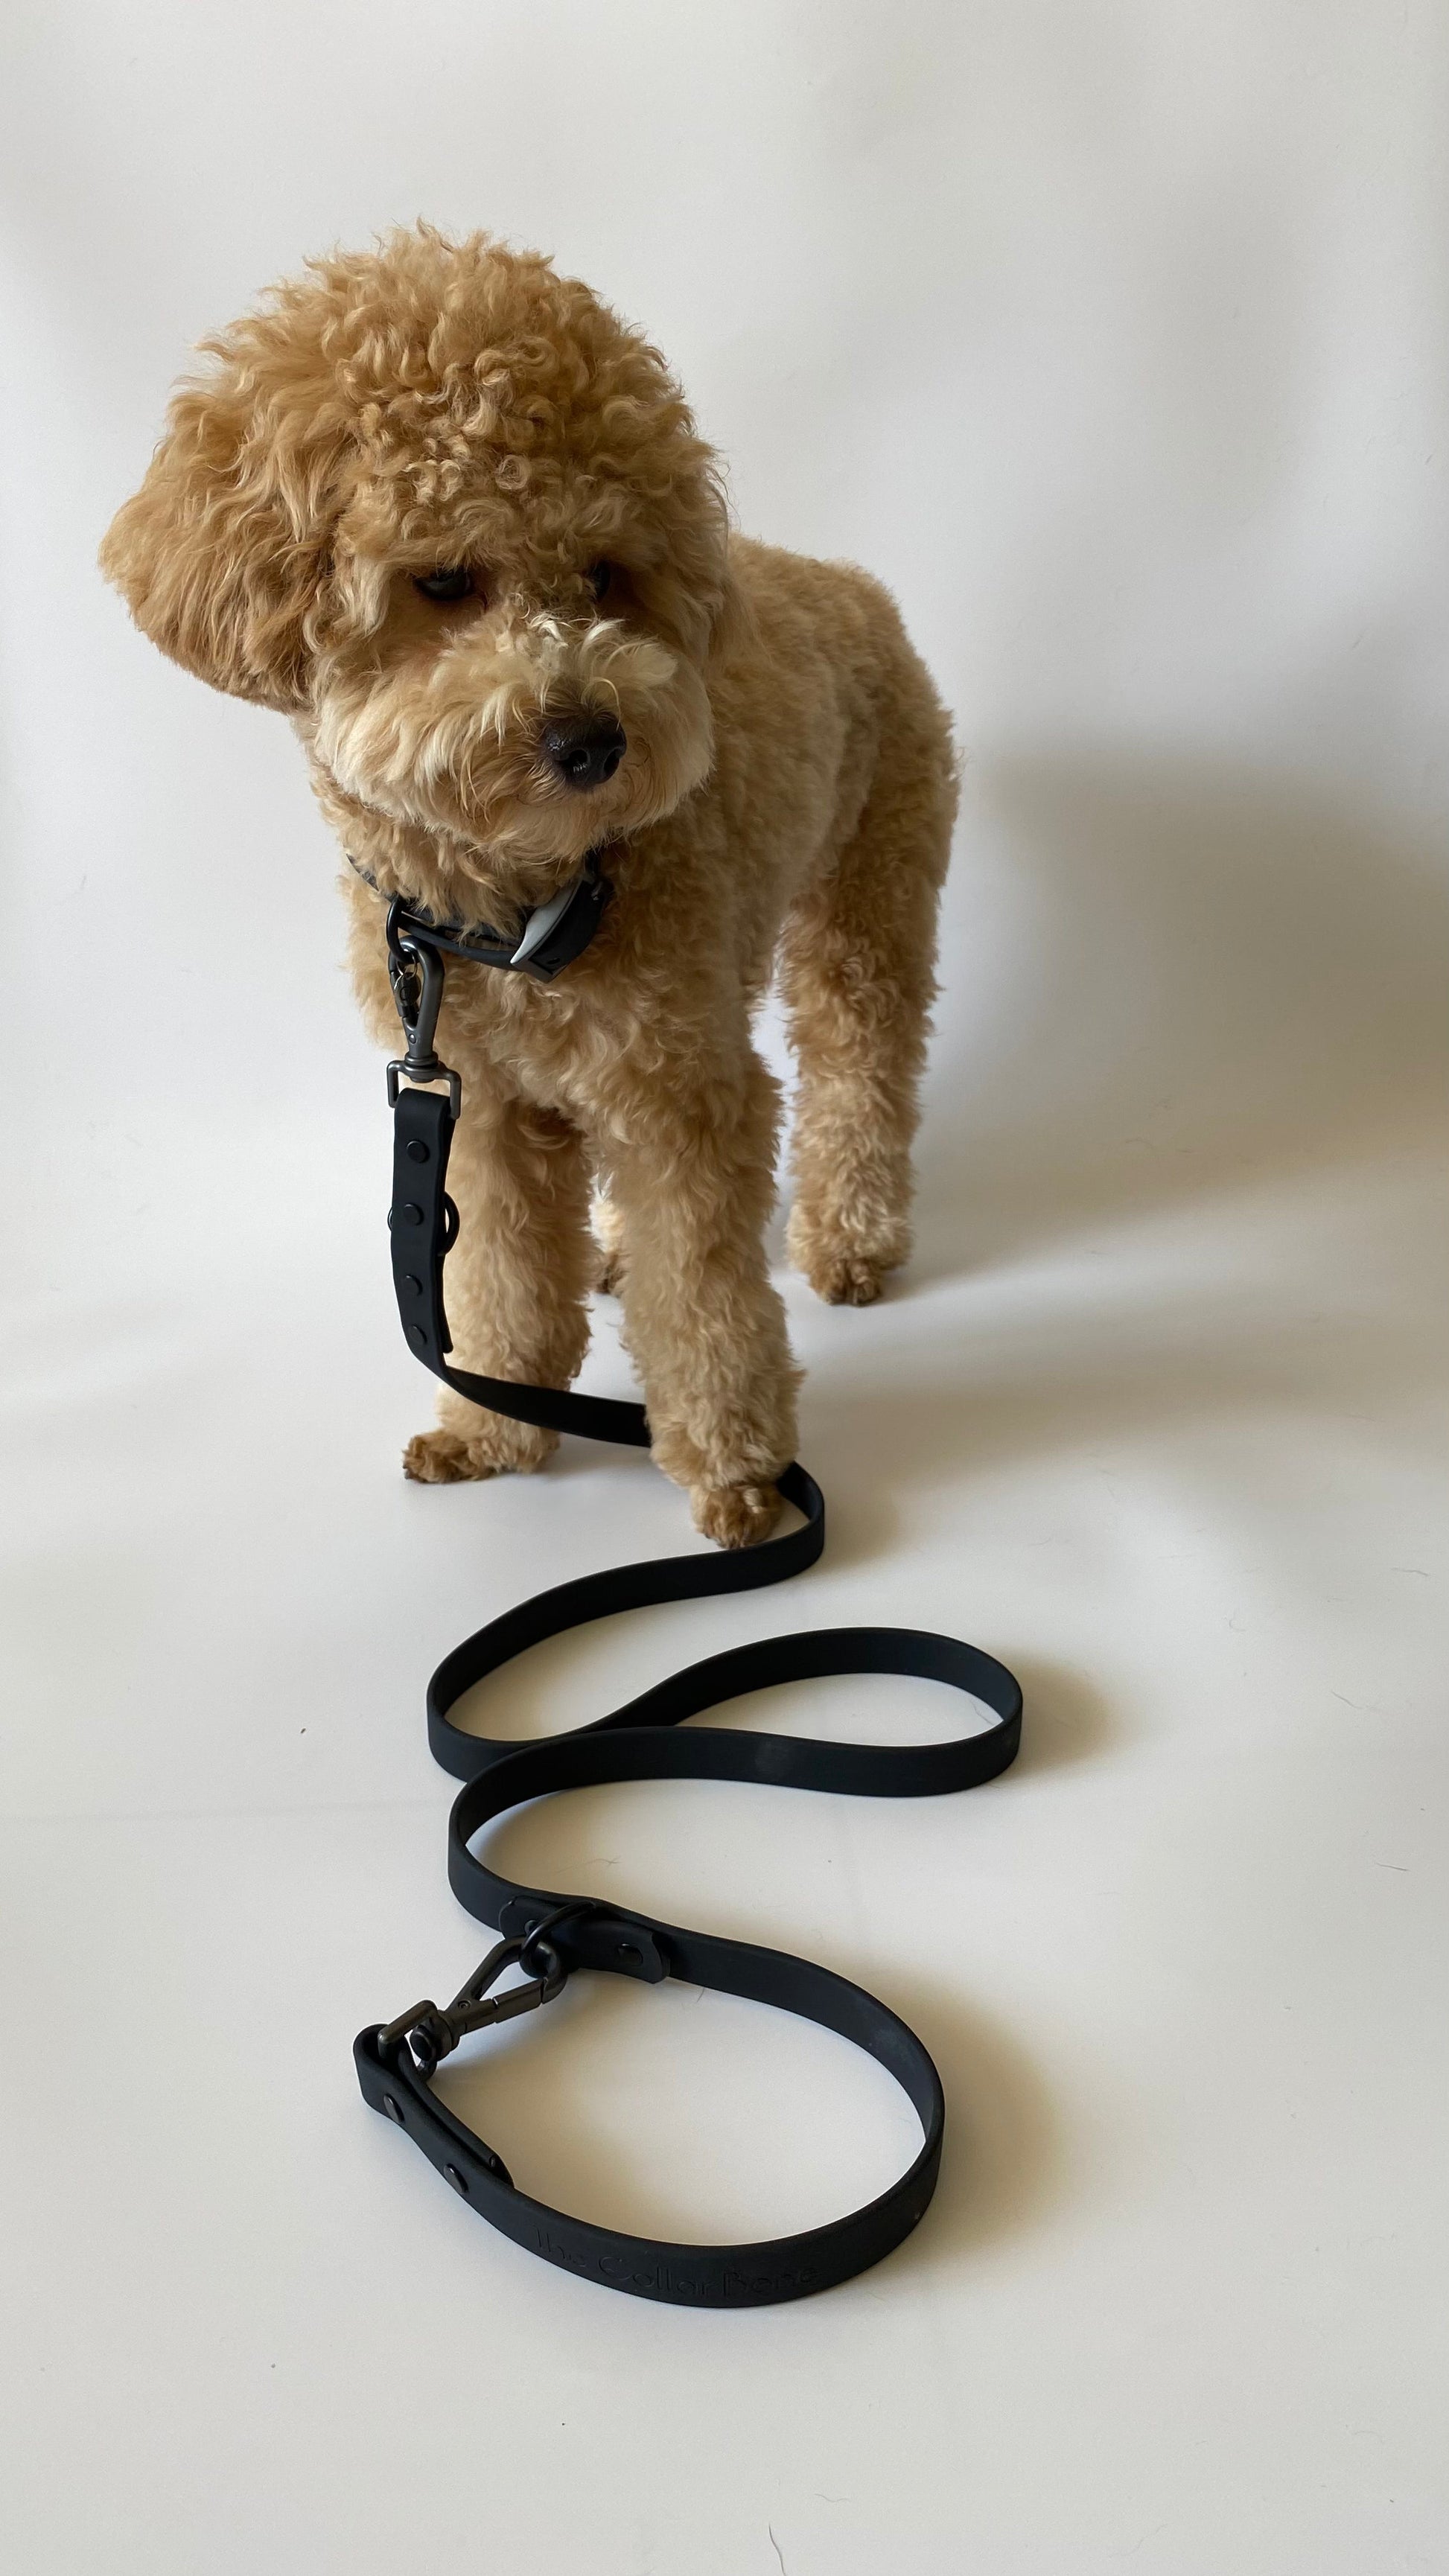 #toypoodle #waterproofcollarand leash